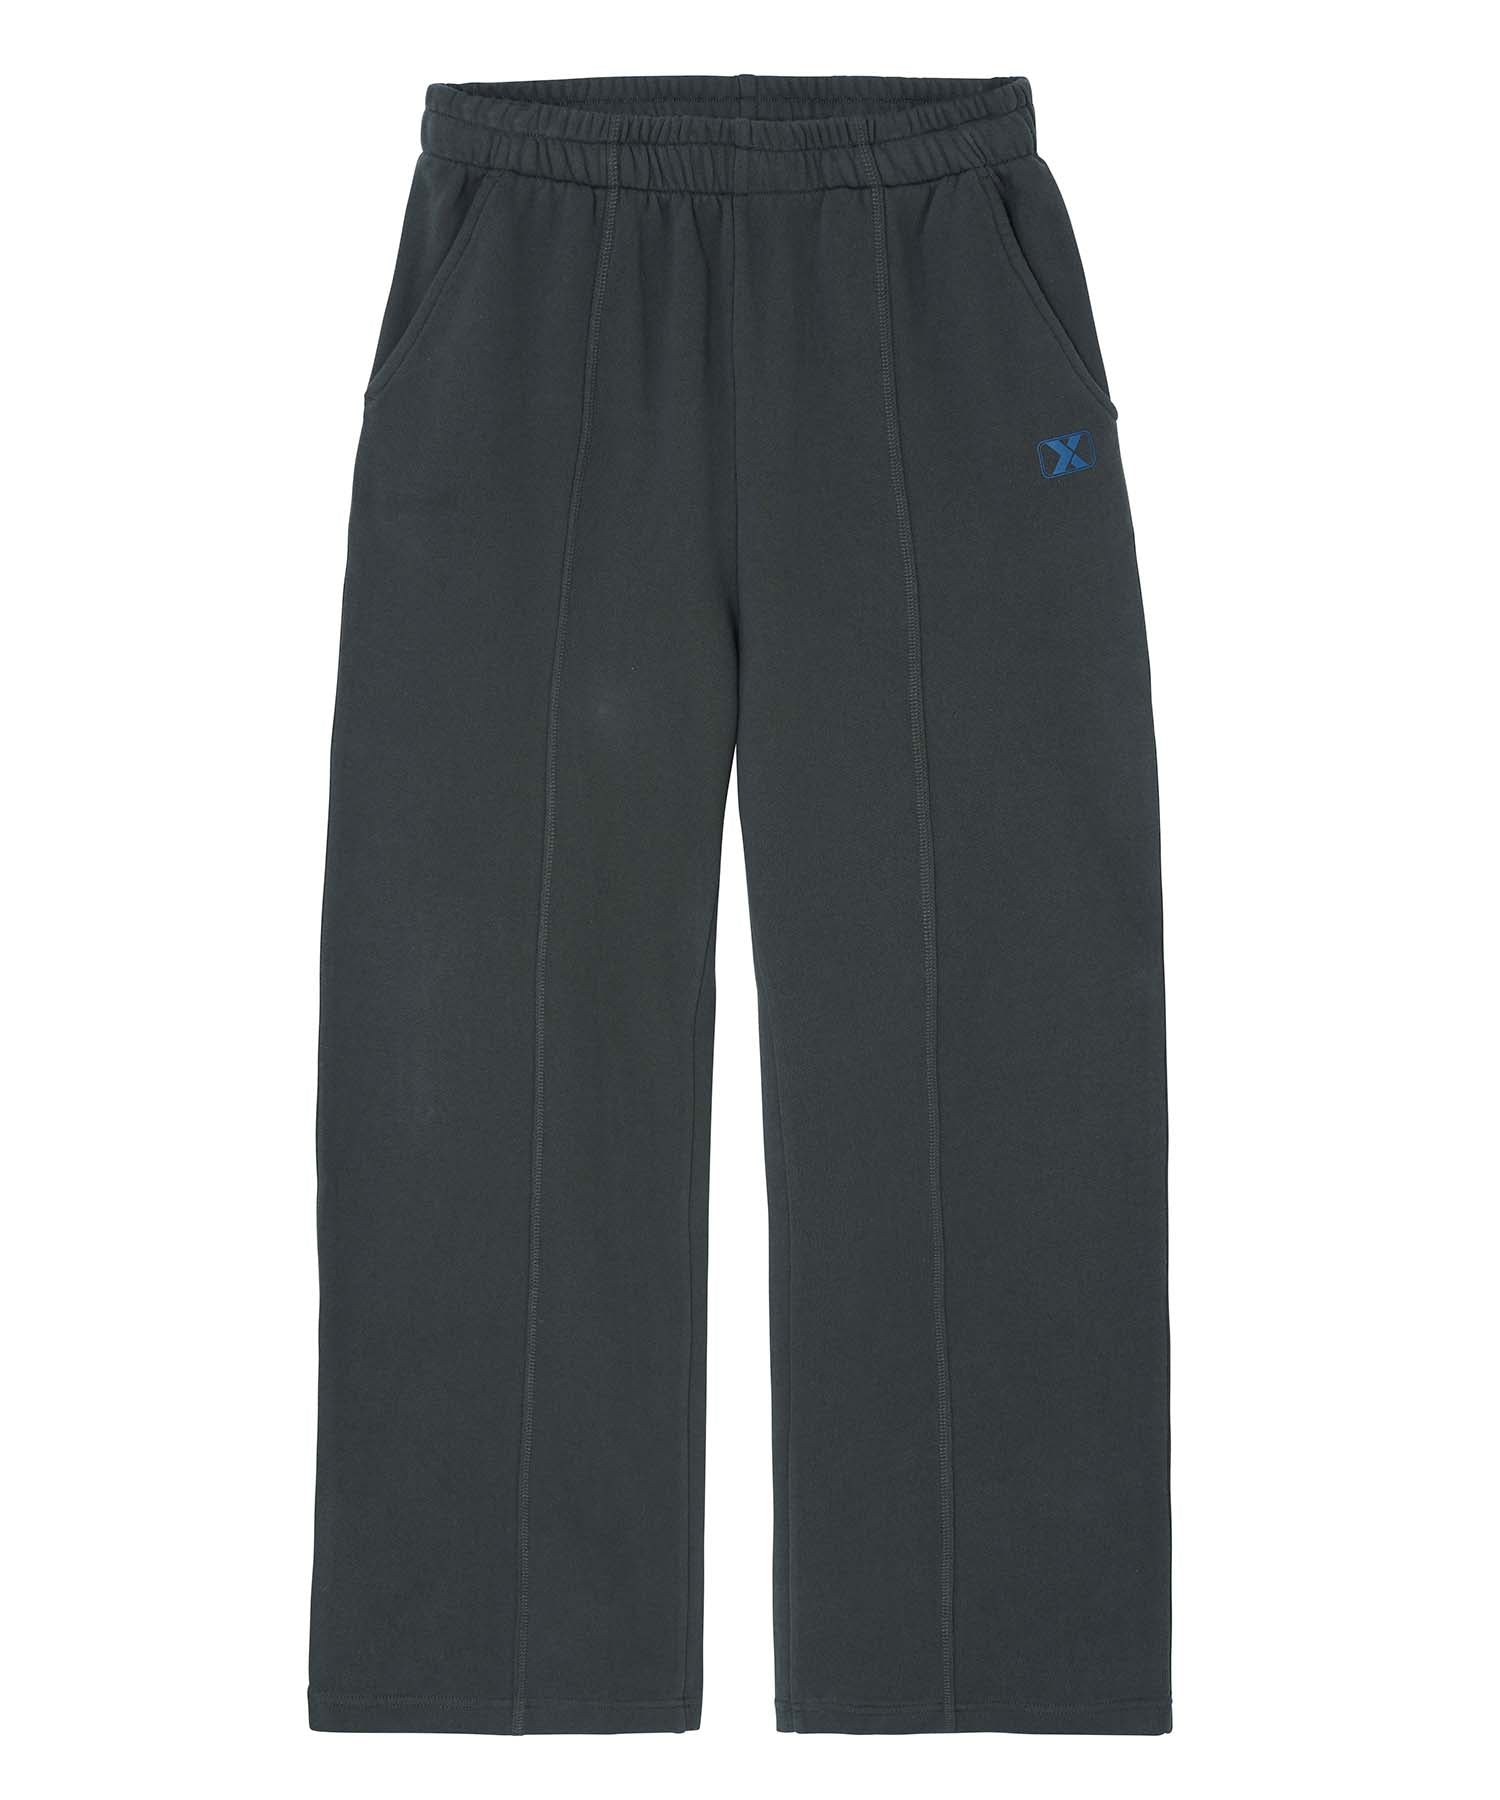 Boys Gray Sweatpant Loose Sportswear Running Sweat Pant Jkt-579 - China  Kids Apparel and Kids Pants price | Made-in-China.com